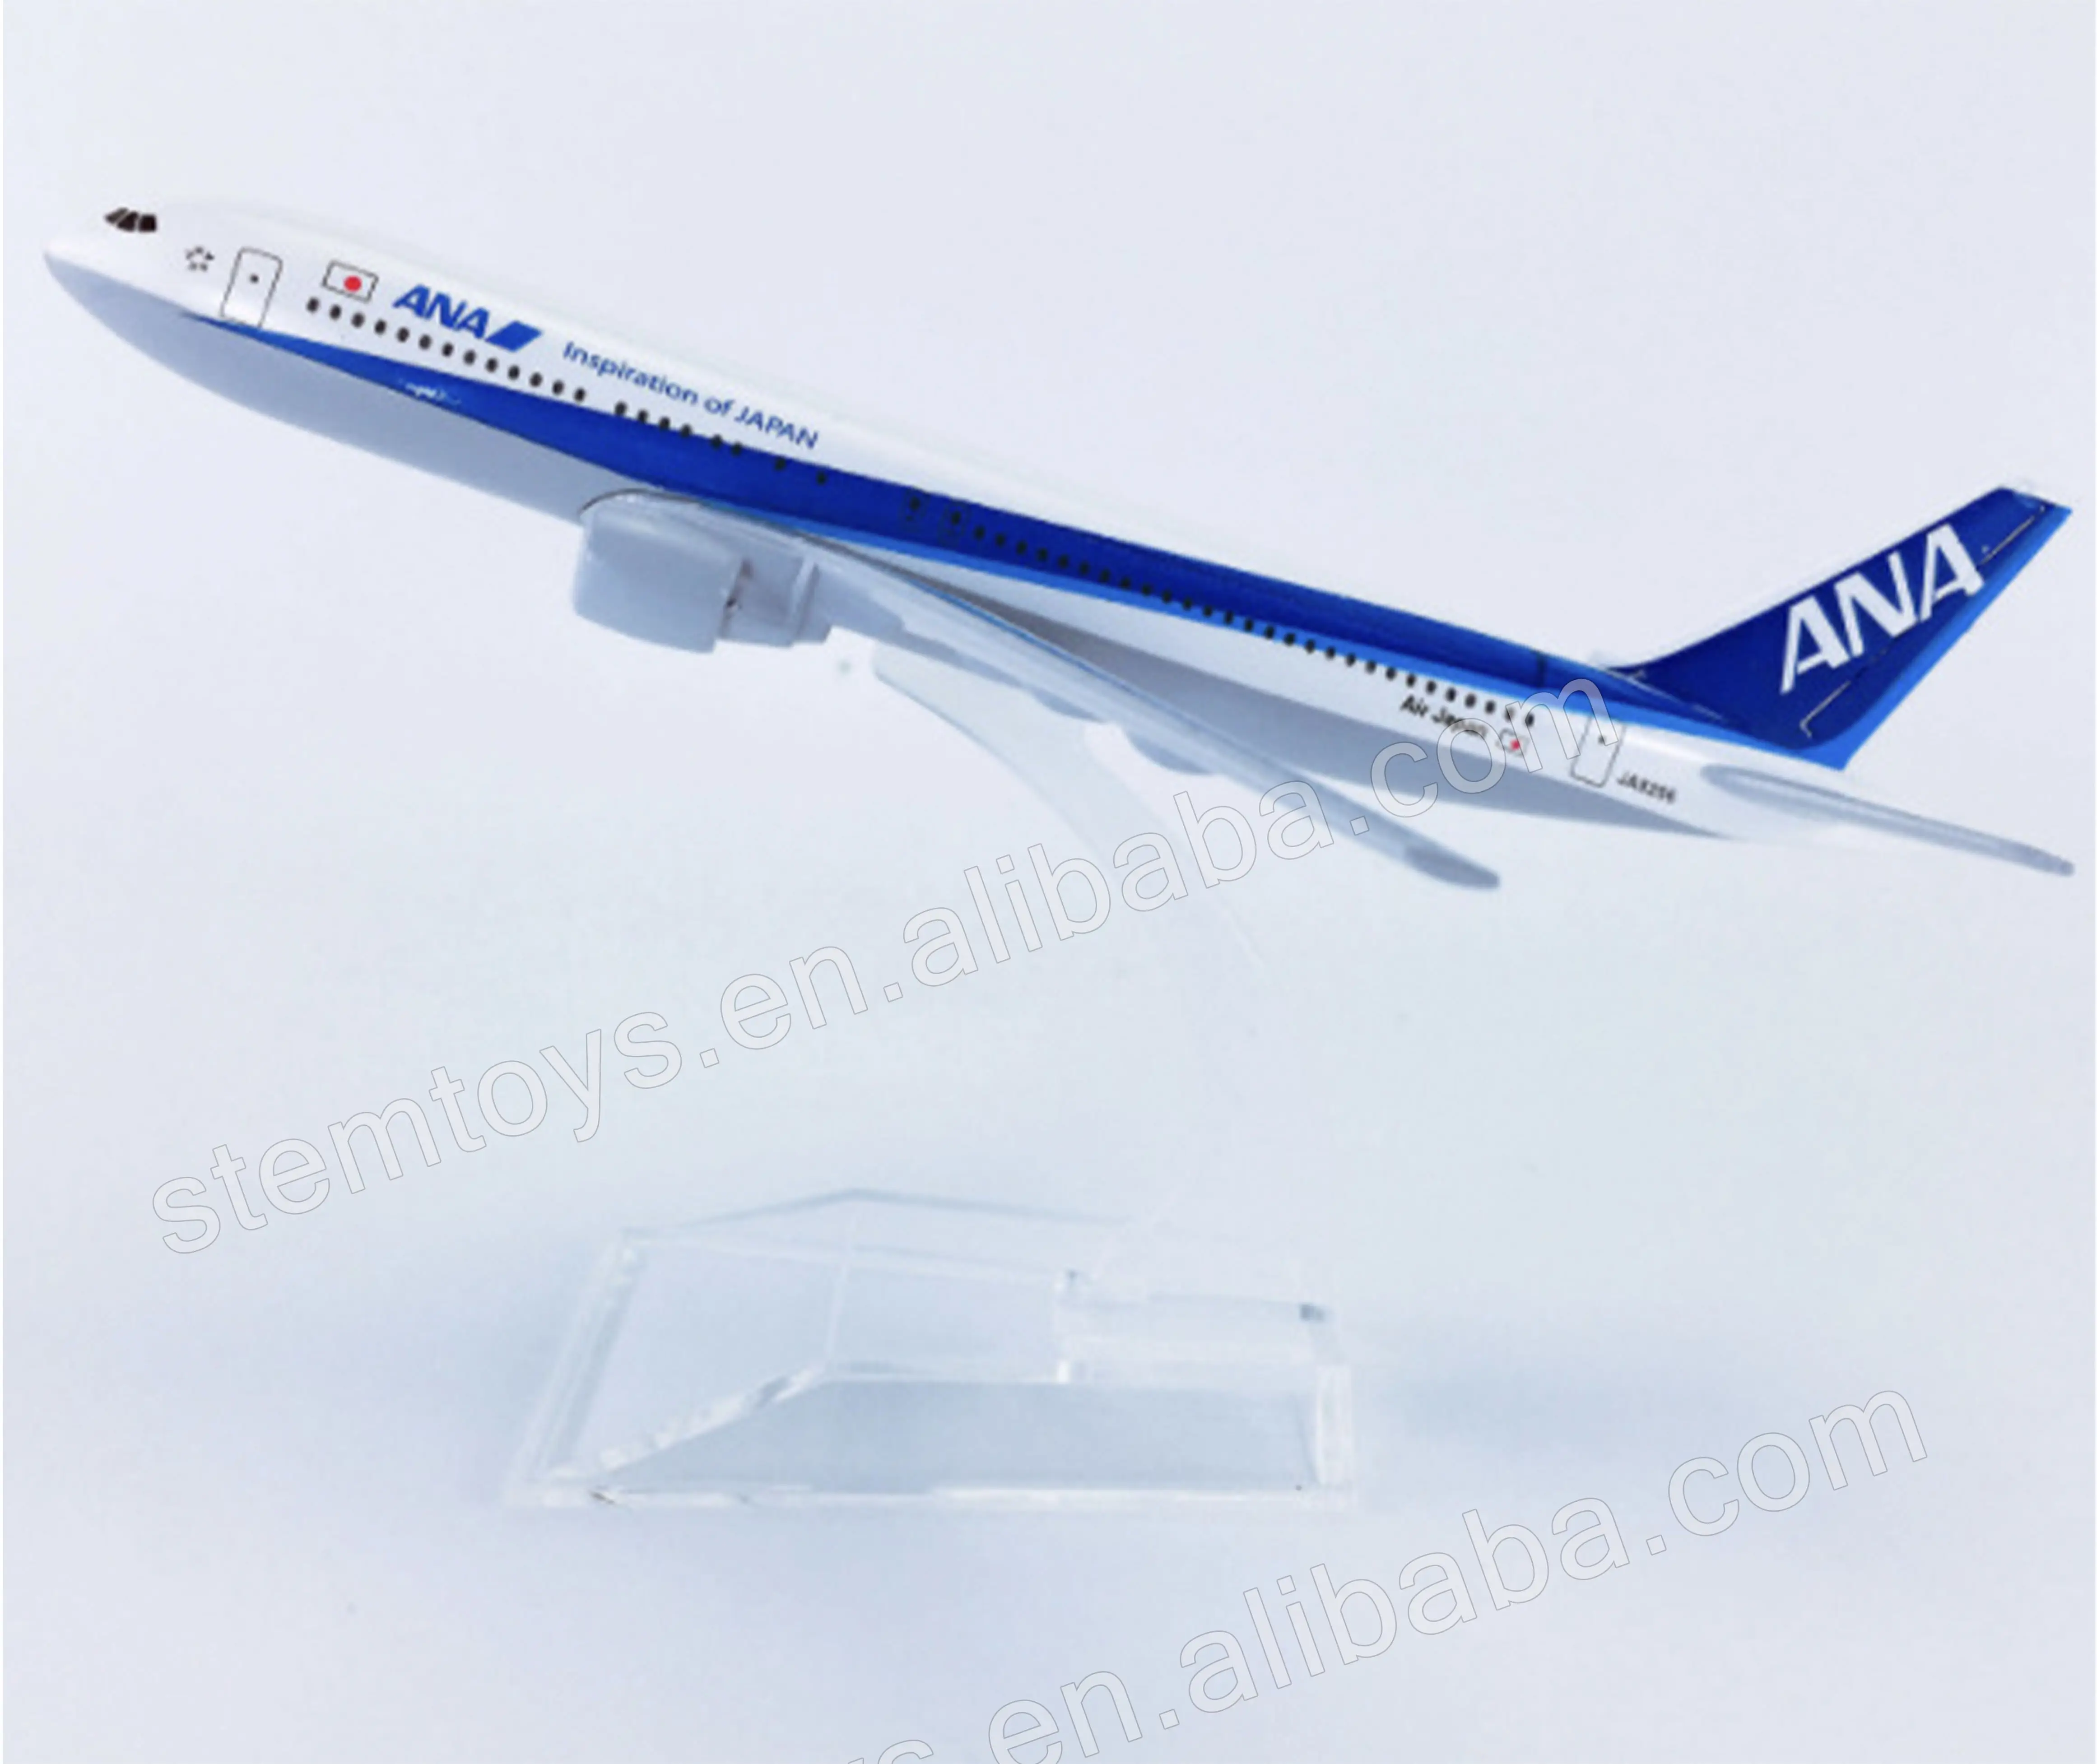 Modelos de aviones japoneses Diecast Metal ANA 777-200ER 1/400 escala modelo de avión para colección modelo de avión